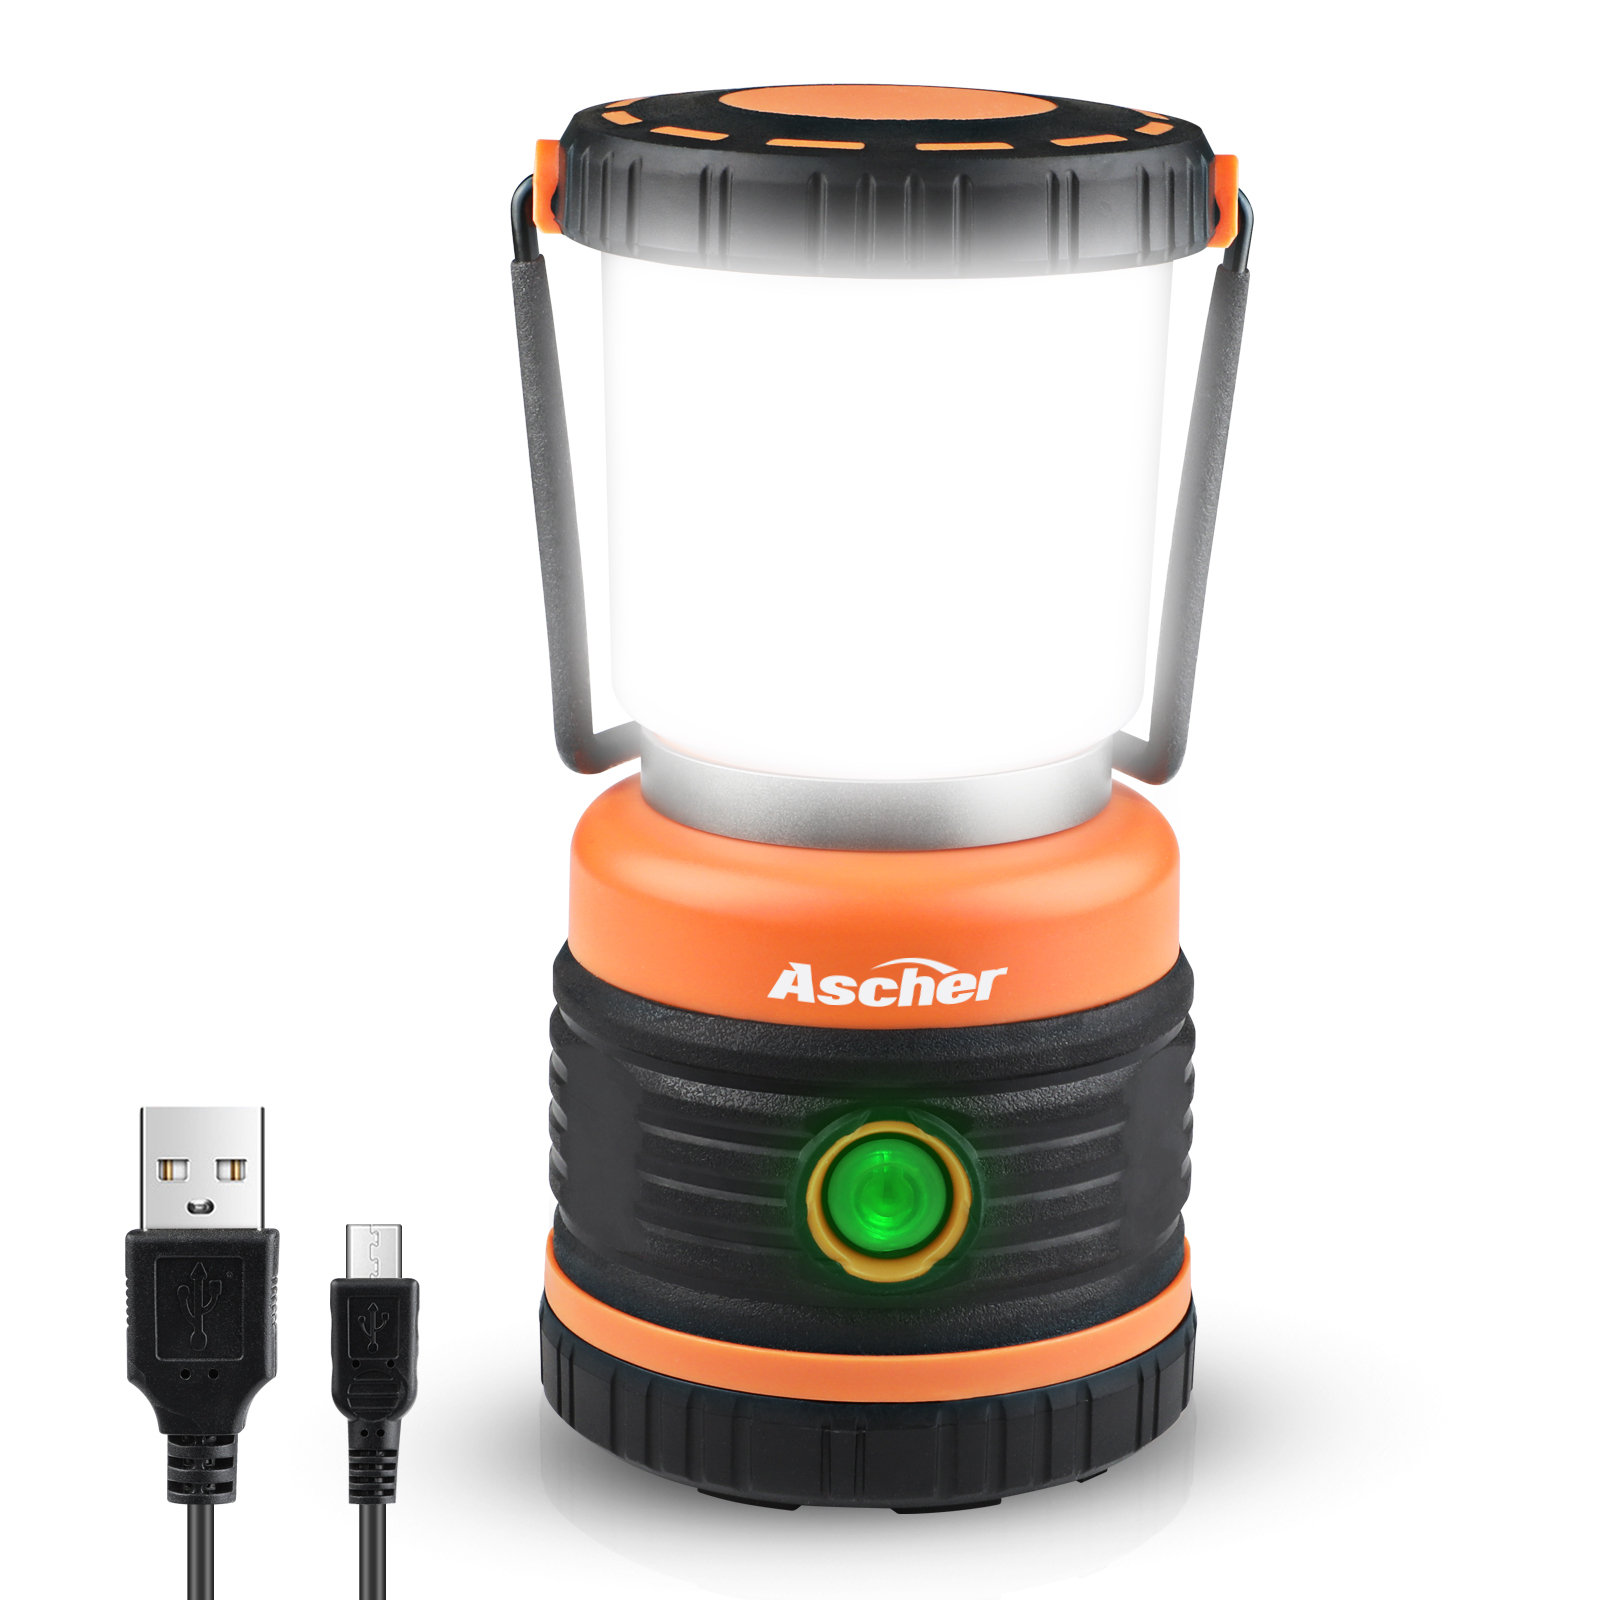 Alltrolite 7.5'' Battery Powered Integrated LED Outdoor Lantern & Reviews